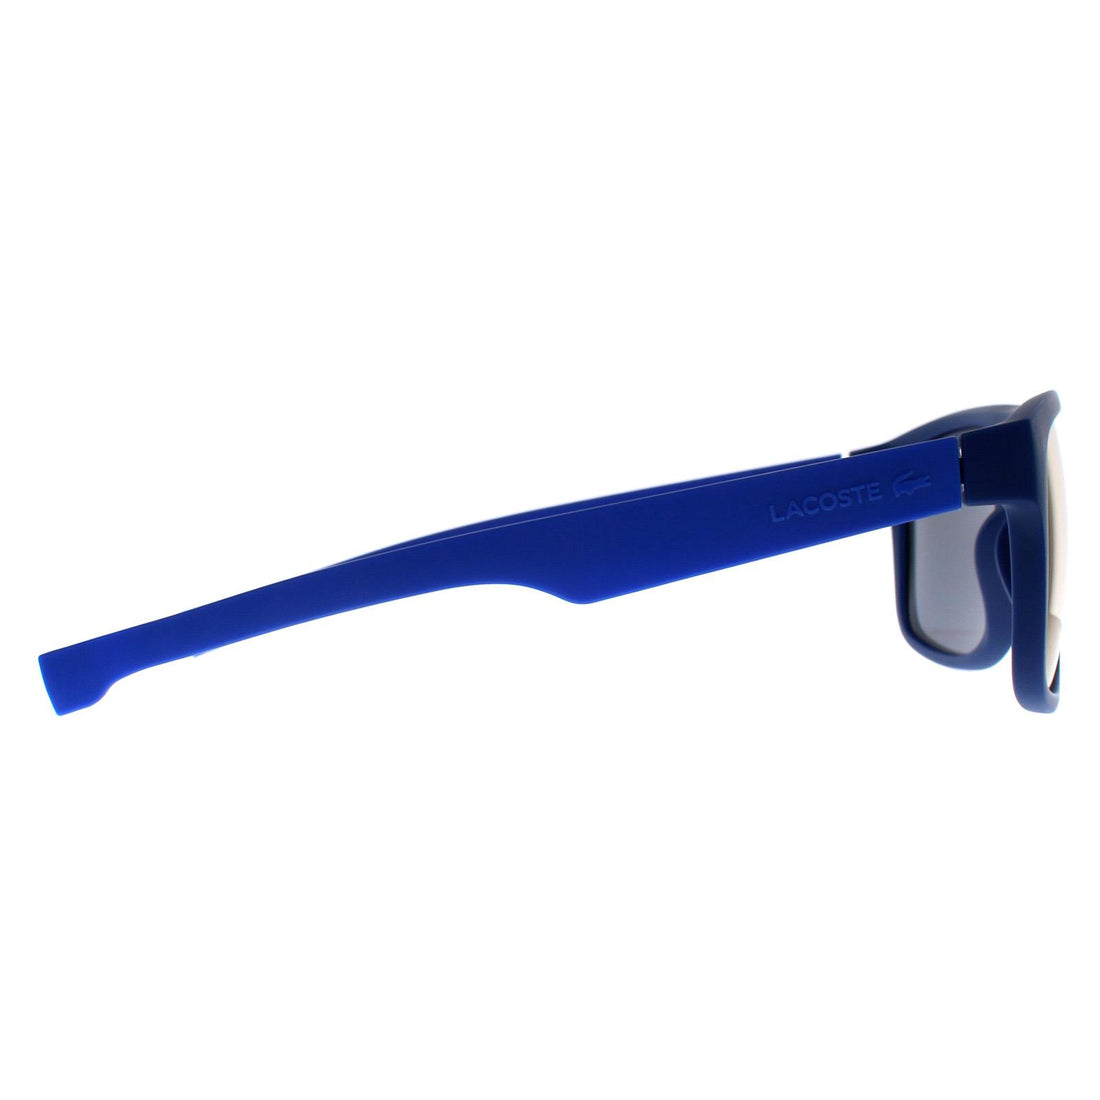 Lacoste Sunglasses L817S 424 Blue Grey